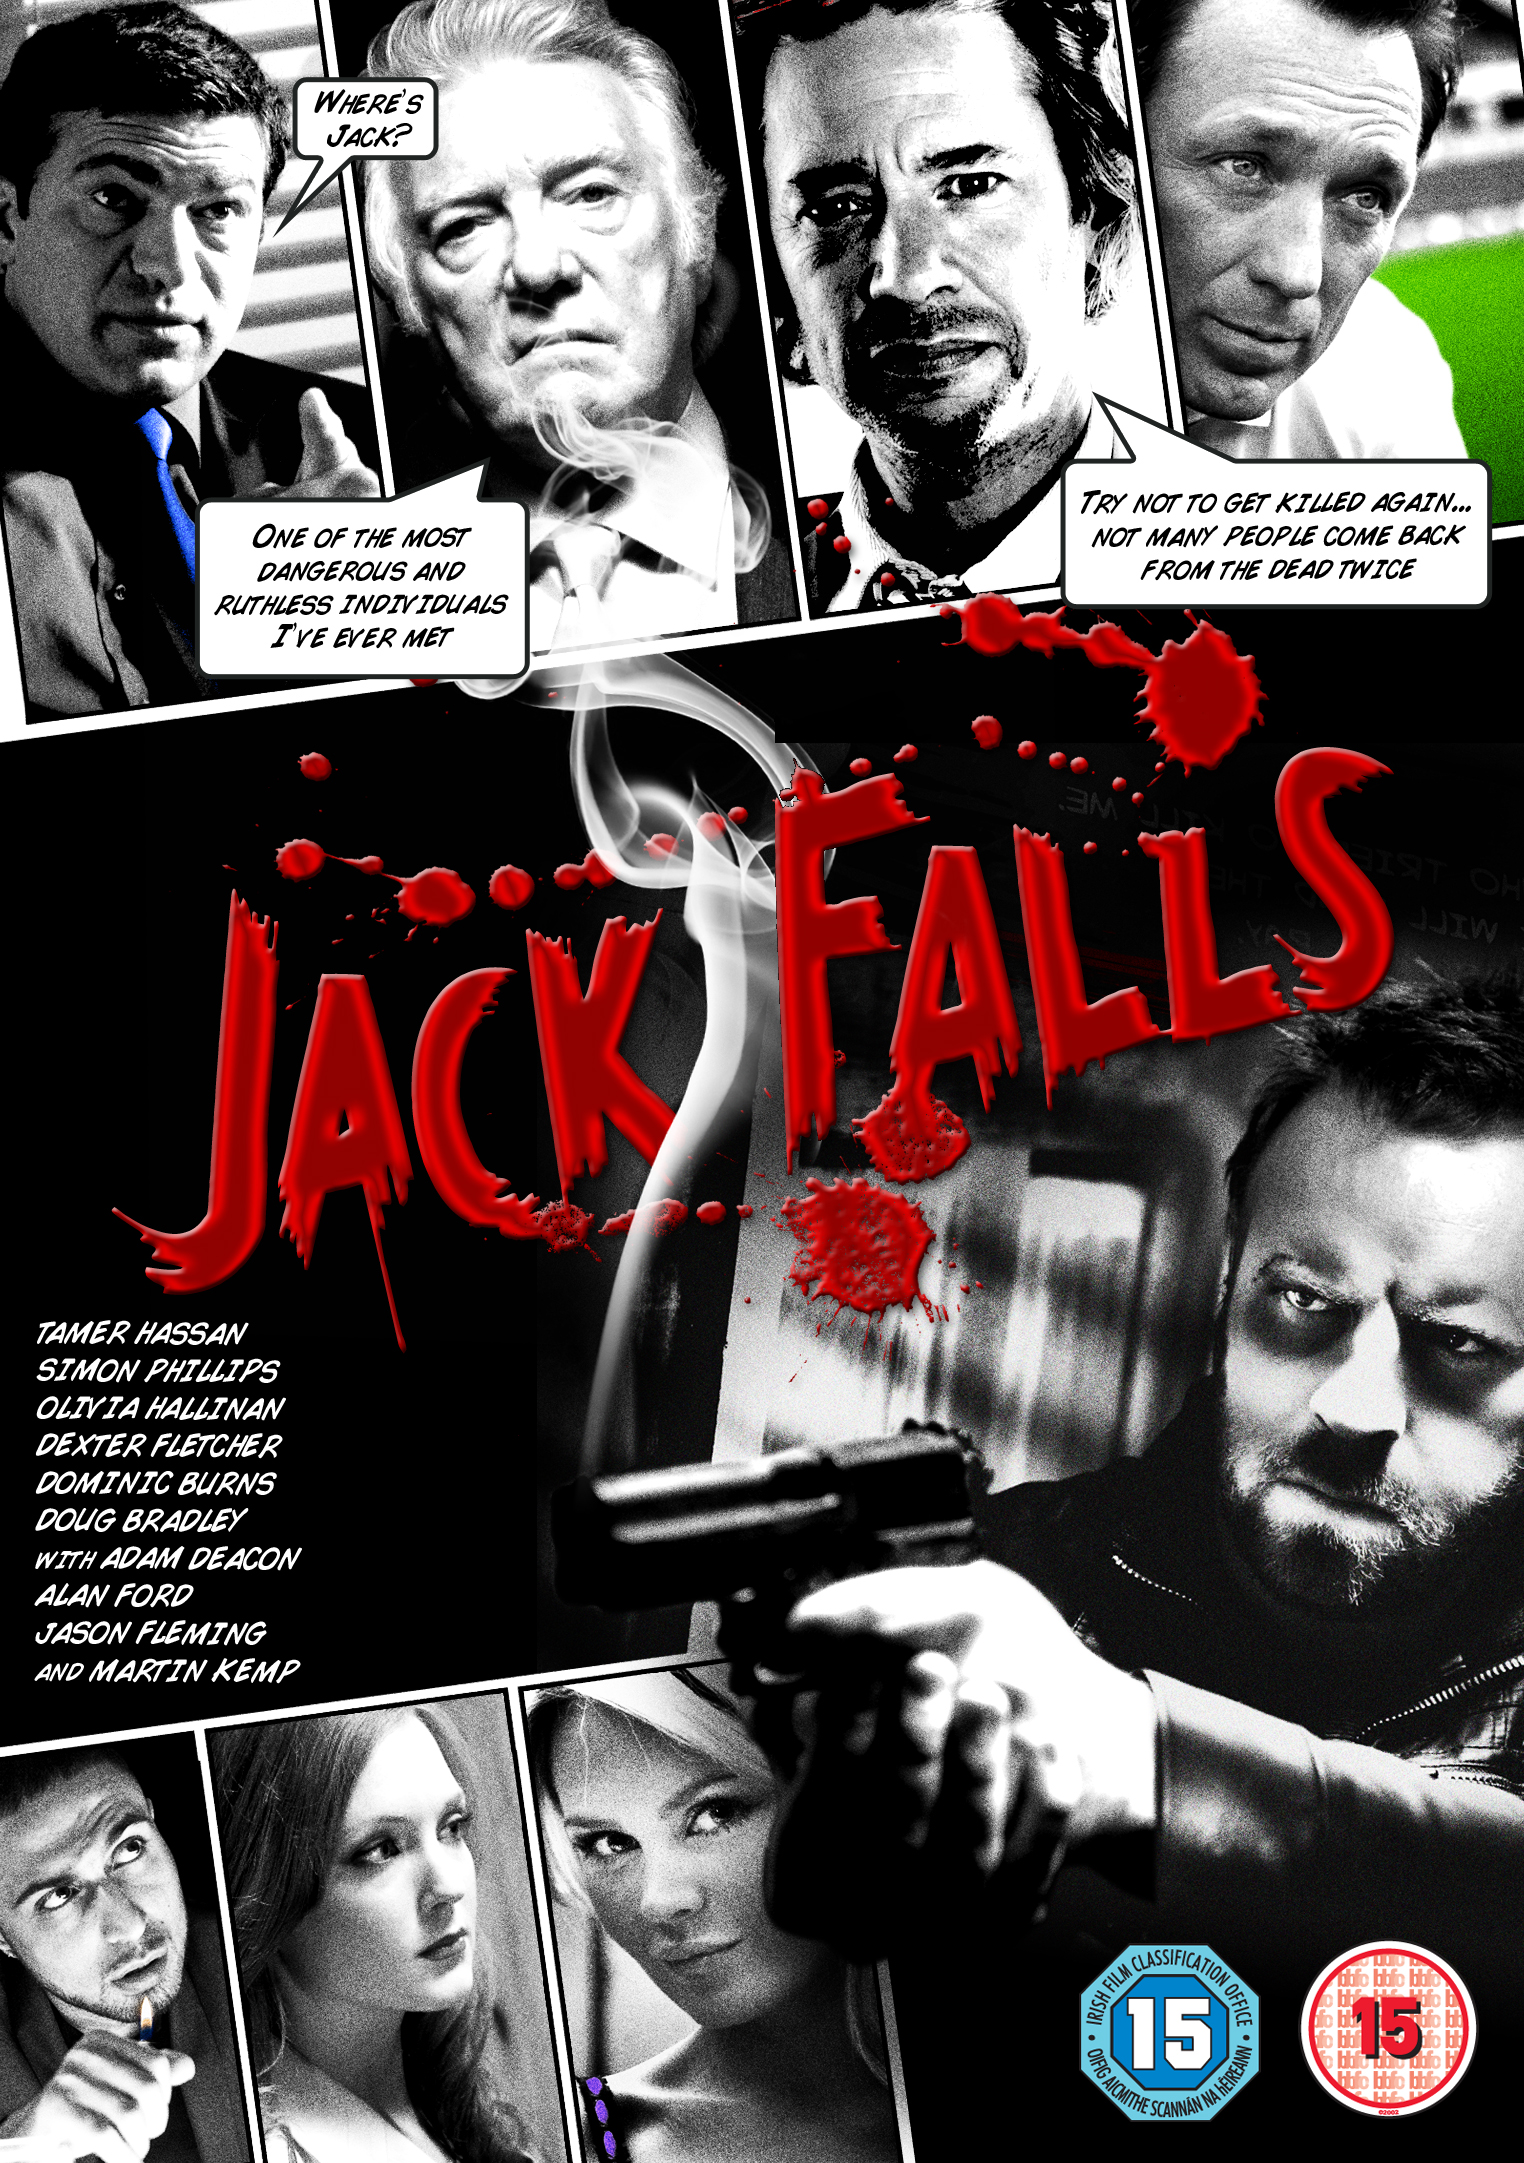 Jack Falls DVD/Blu-ray cover.